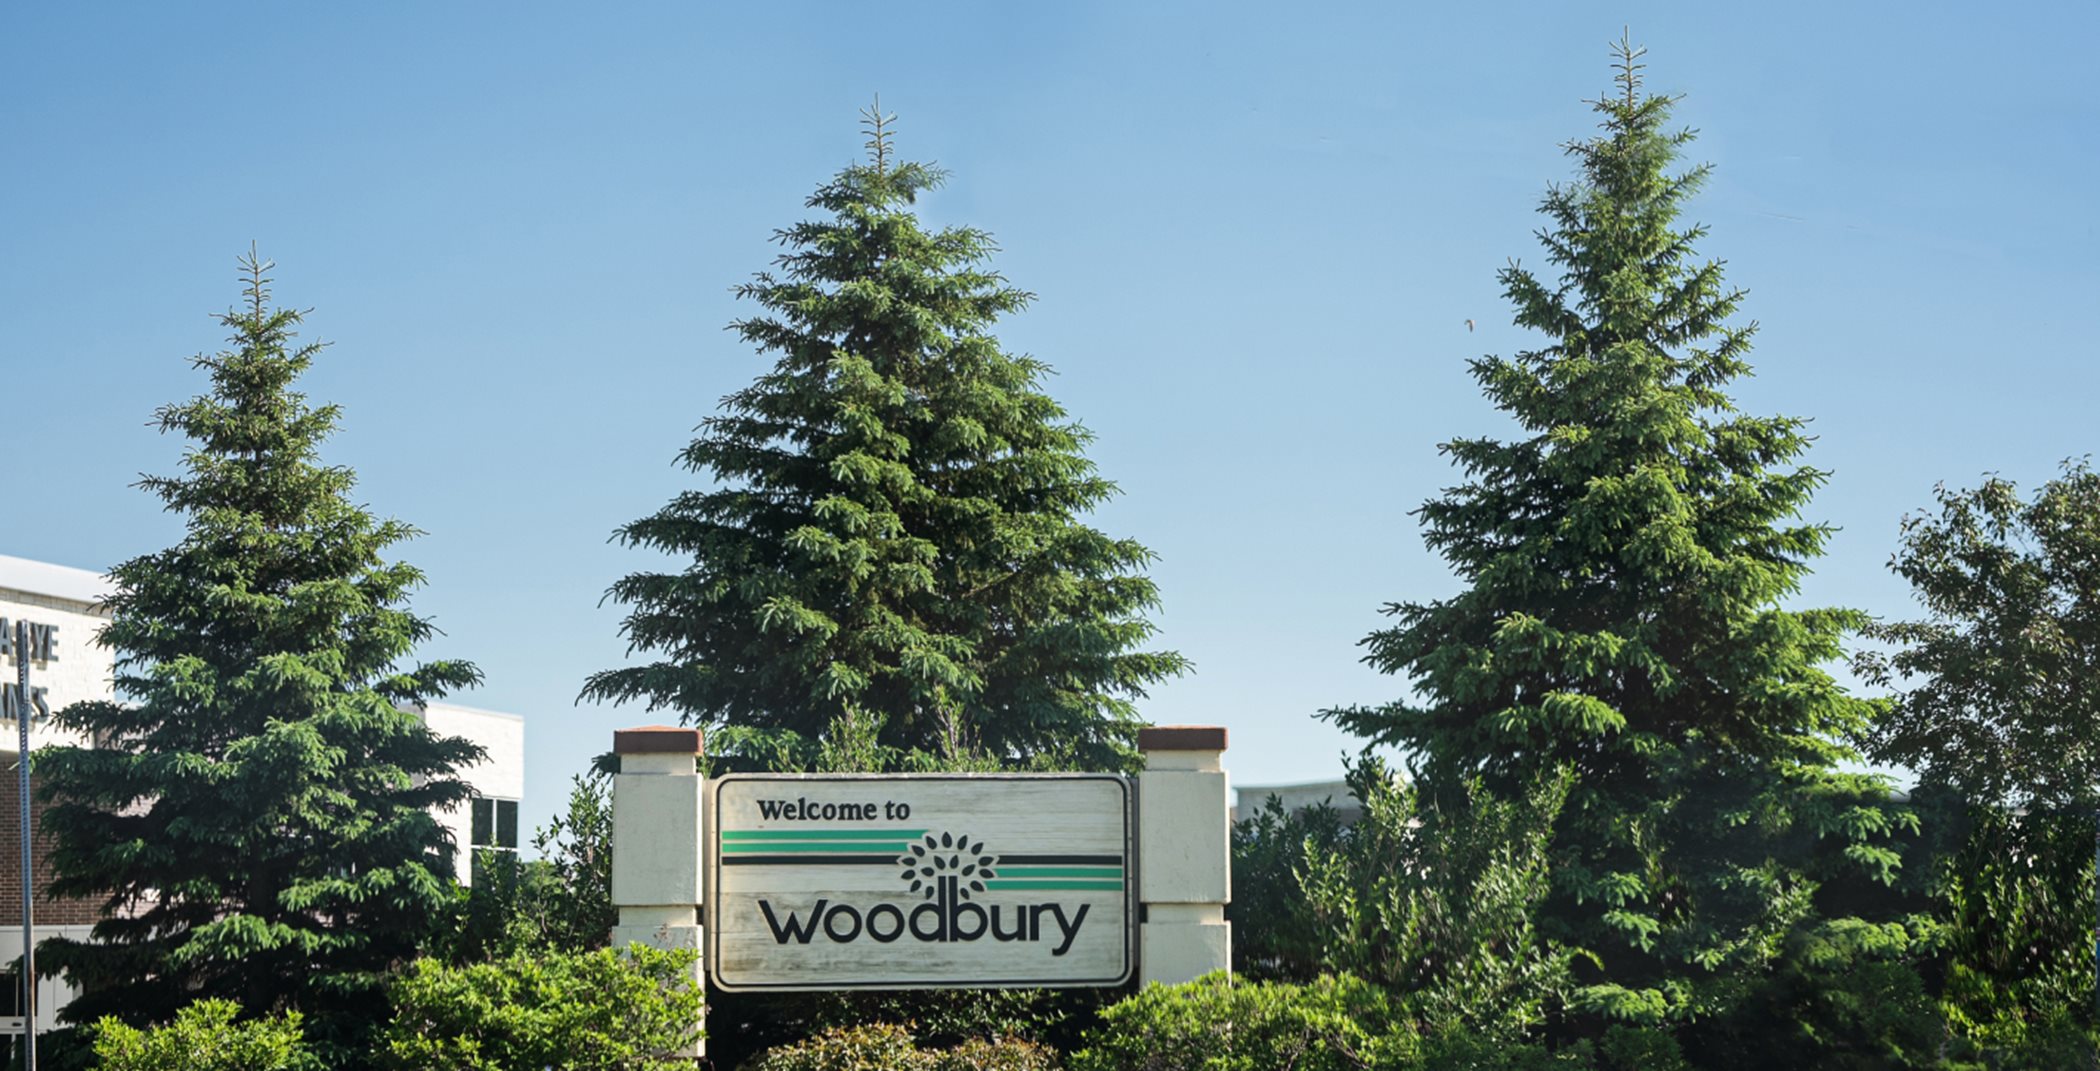 Woodbury city sign